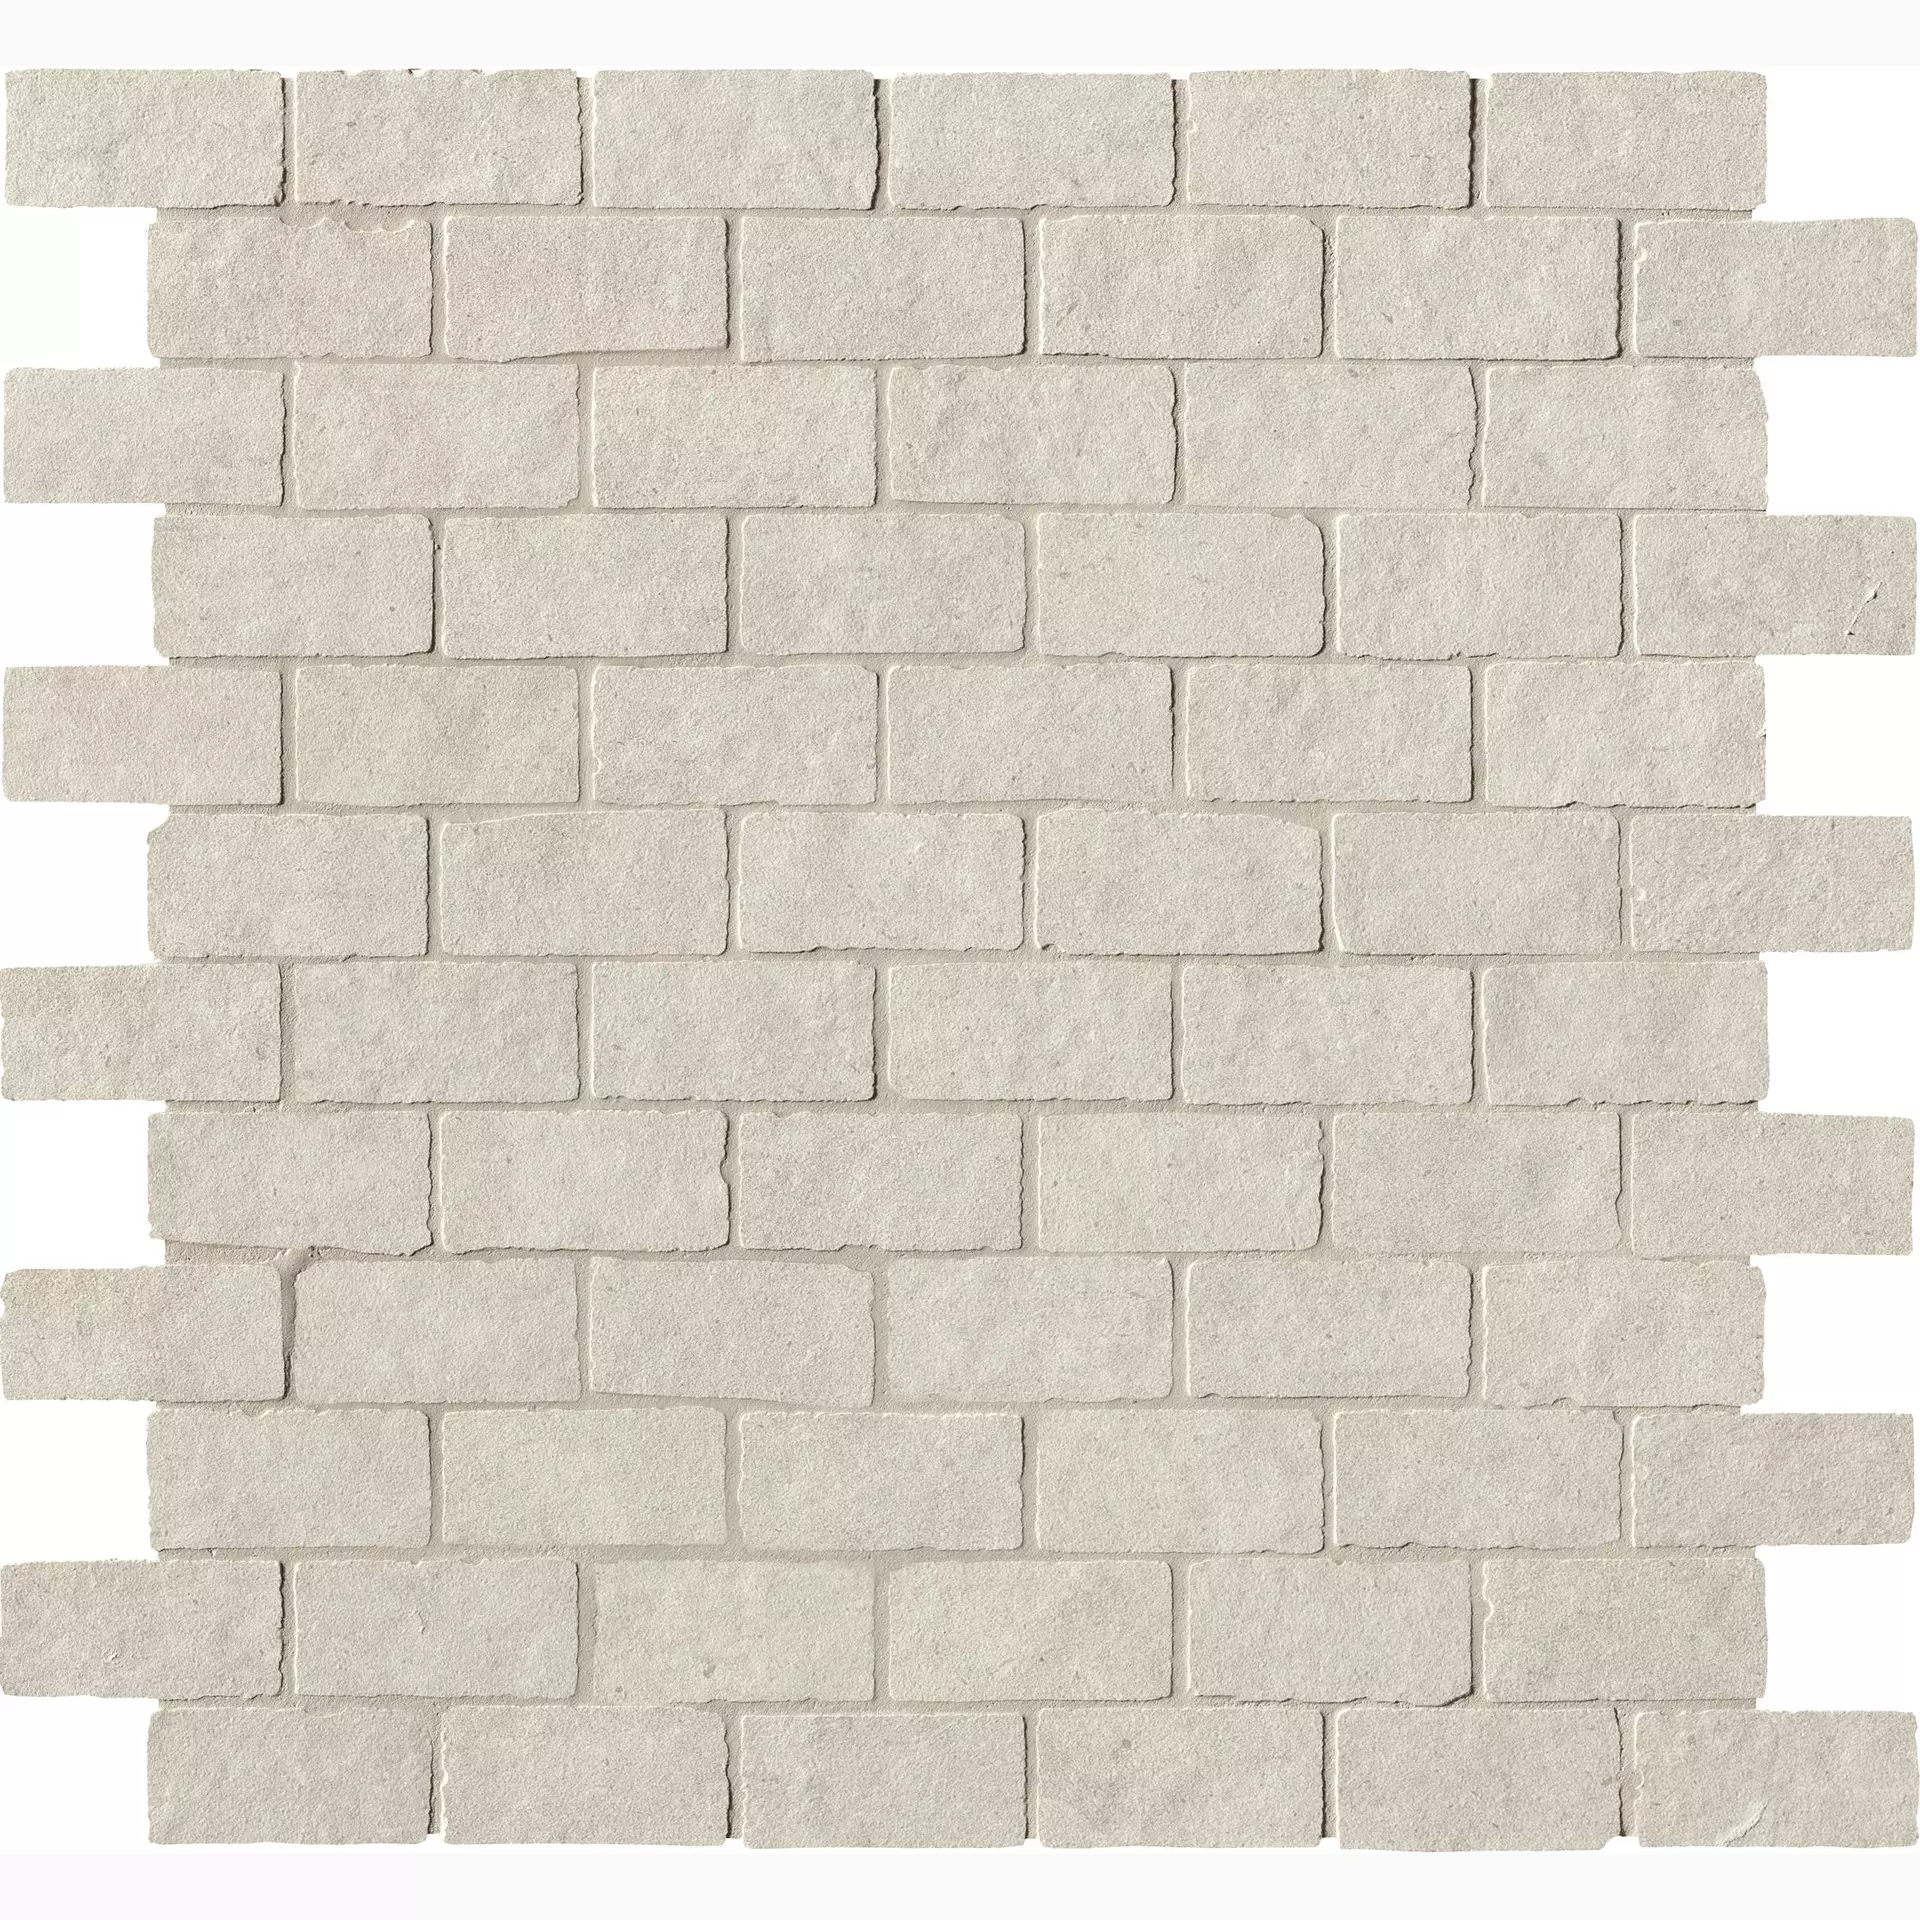 FAP Lumina Stone Grey Anticato Grey fOMK antiquiert 30,5x30,5cm Macromosaico Brick